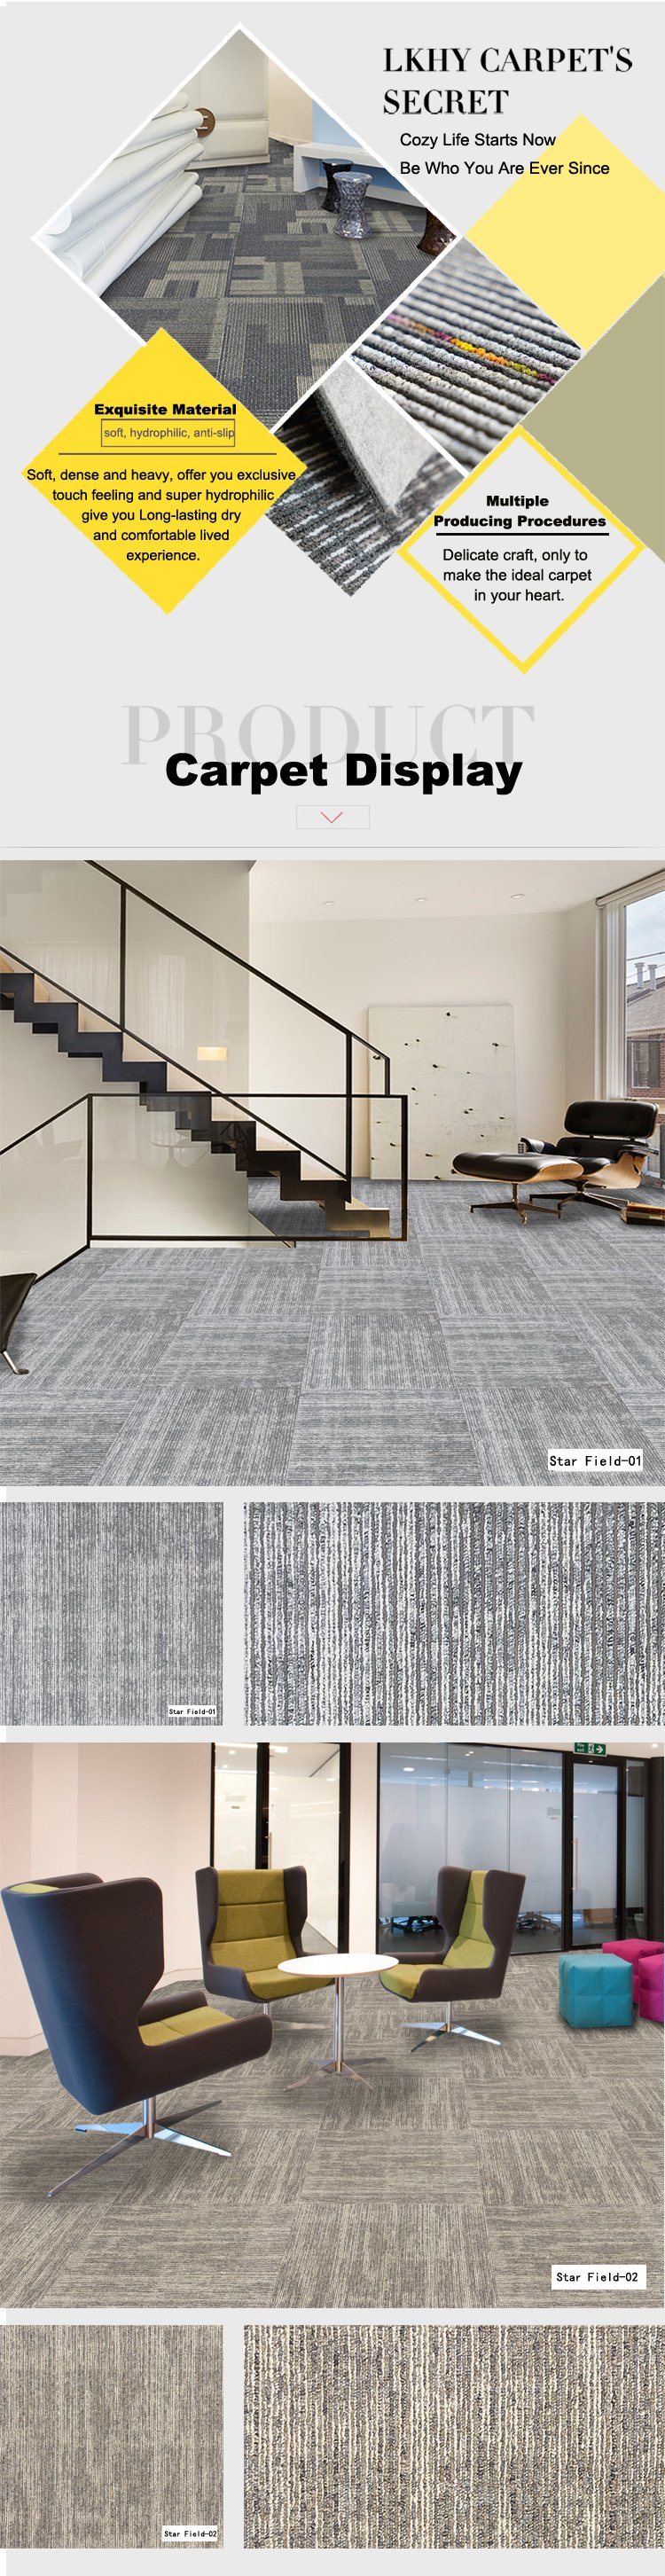 China Top 10 Carpet Brands PP Washable Anti Slip Flooring Carpet_Tiles for Home